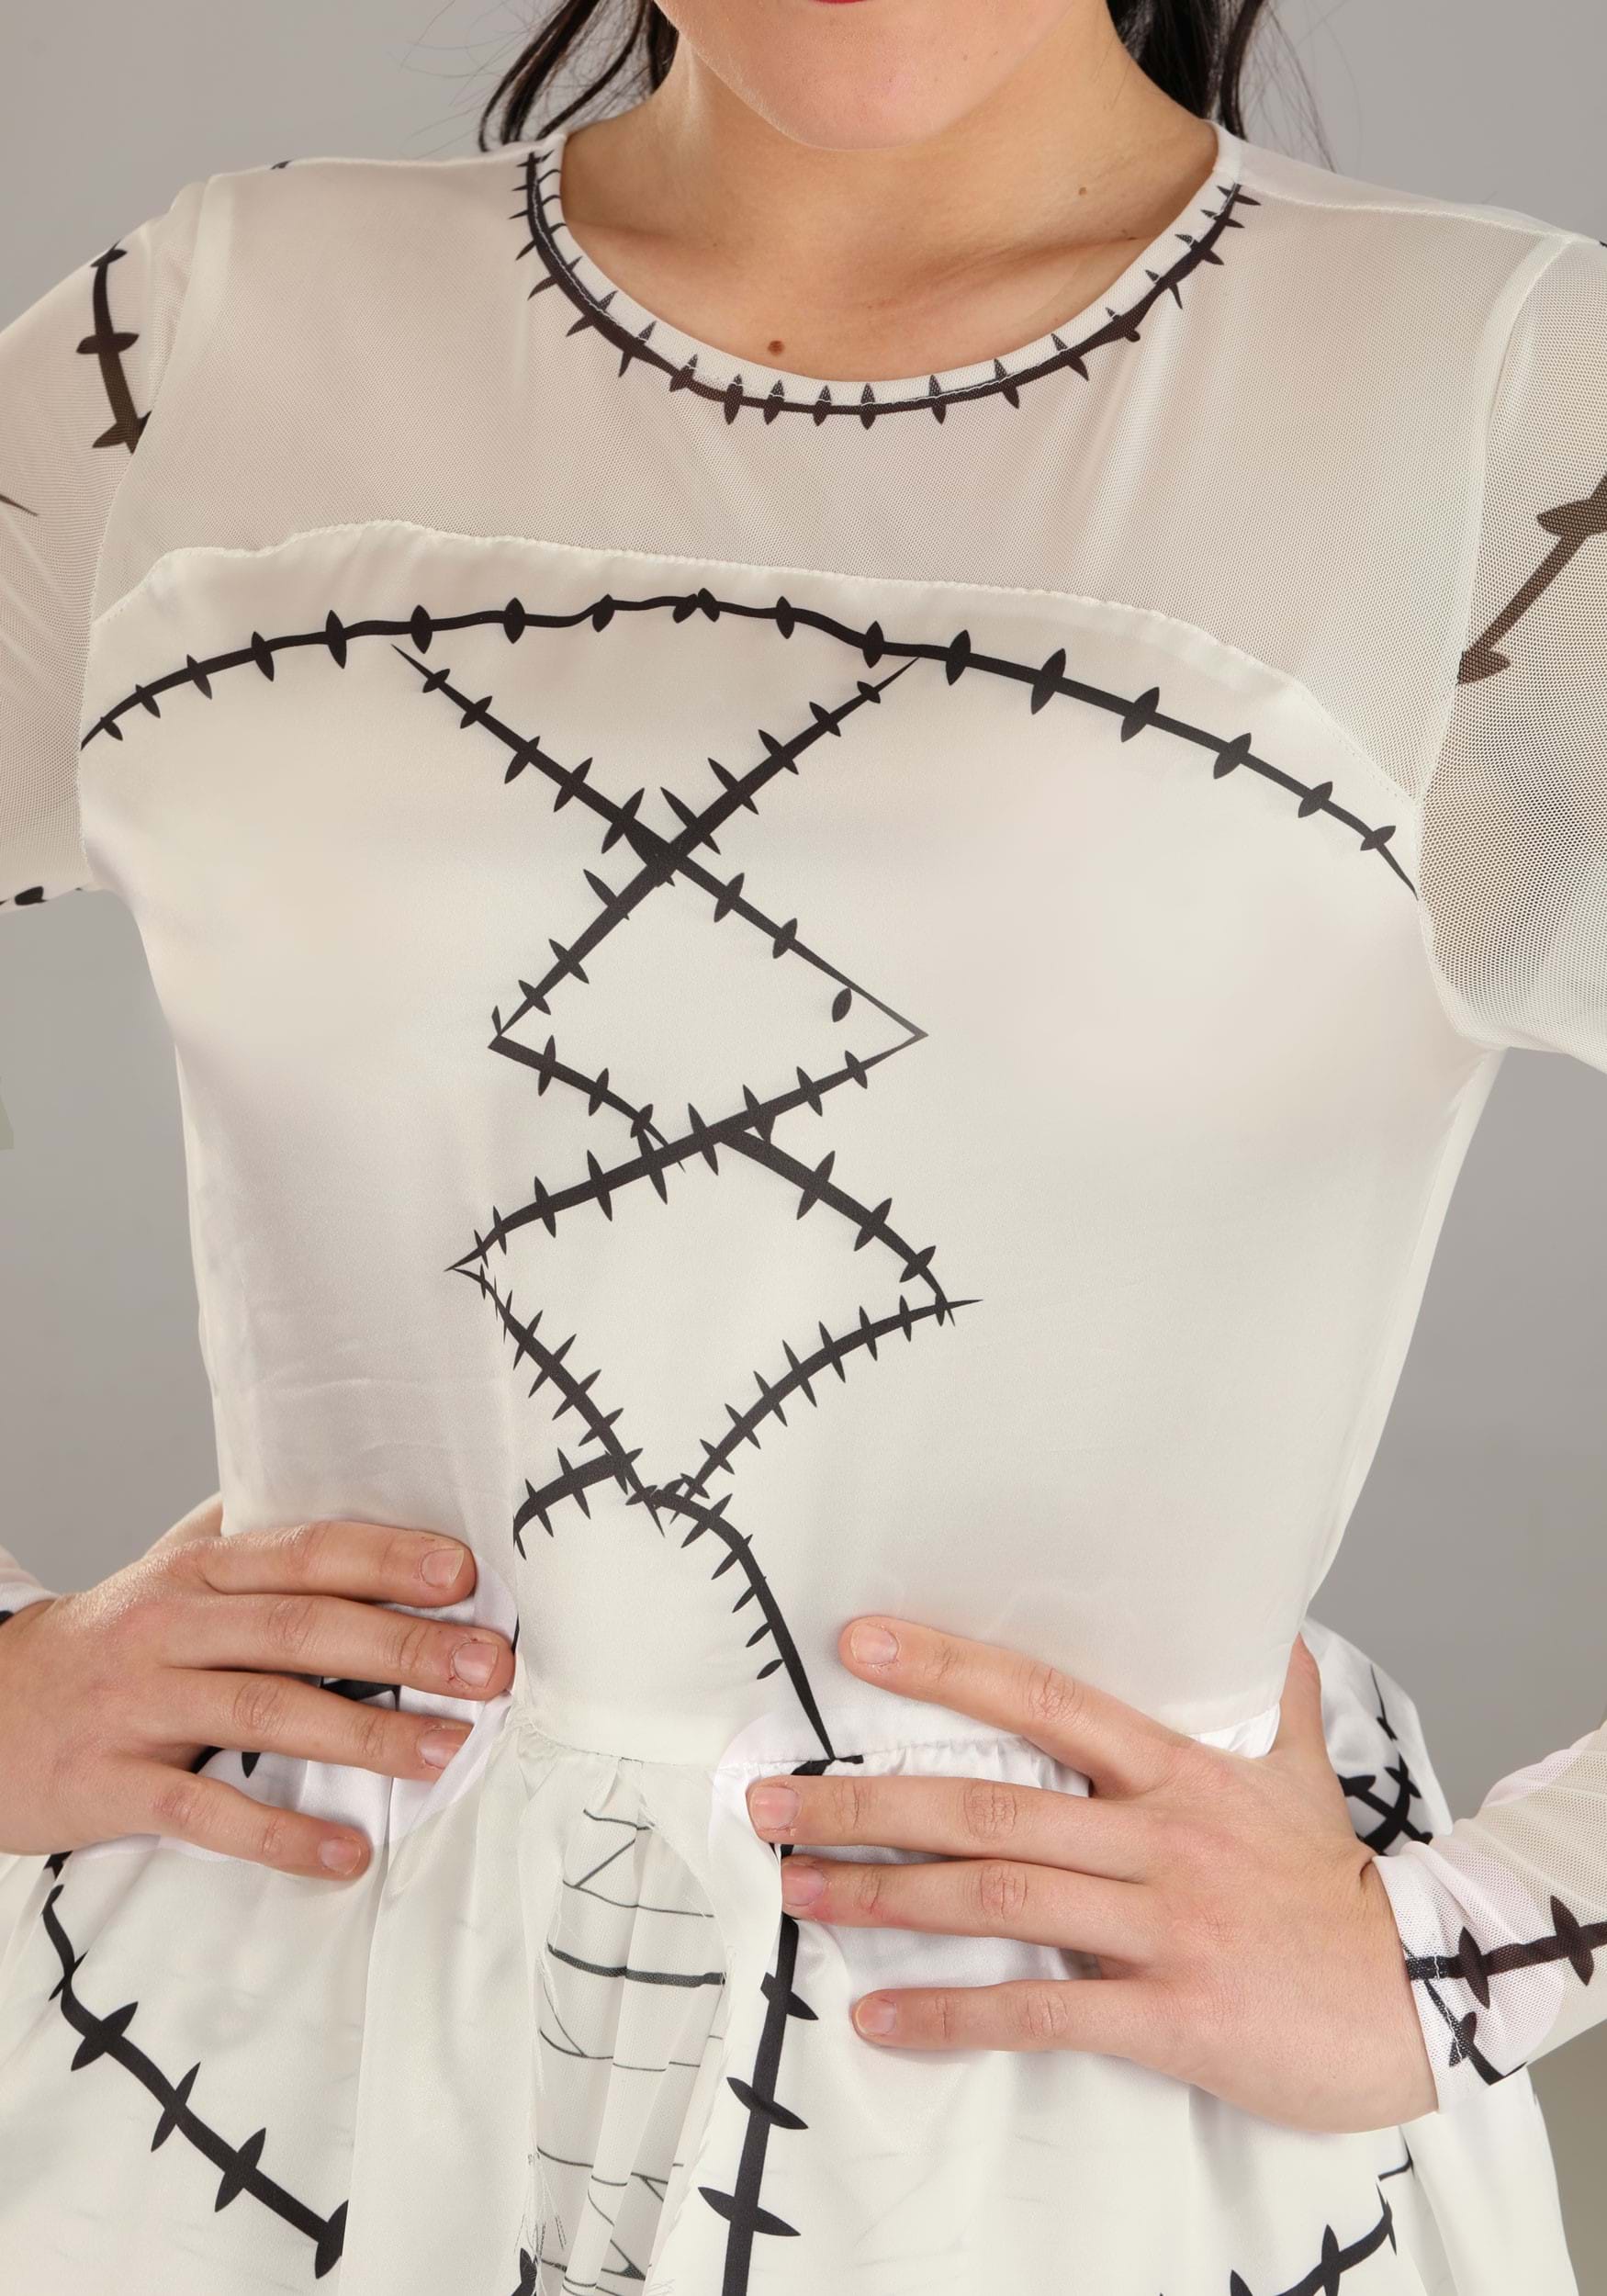 Adult Bride Of Frankenstein Costume Dress